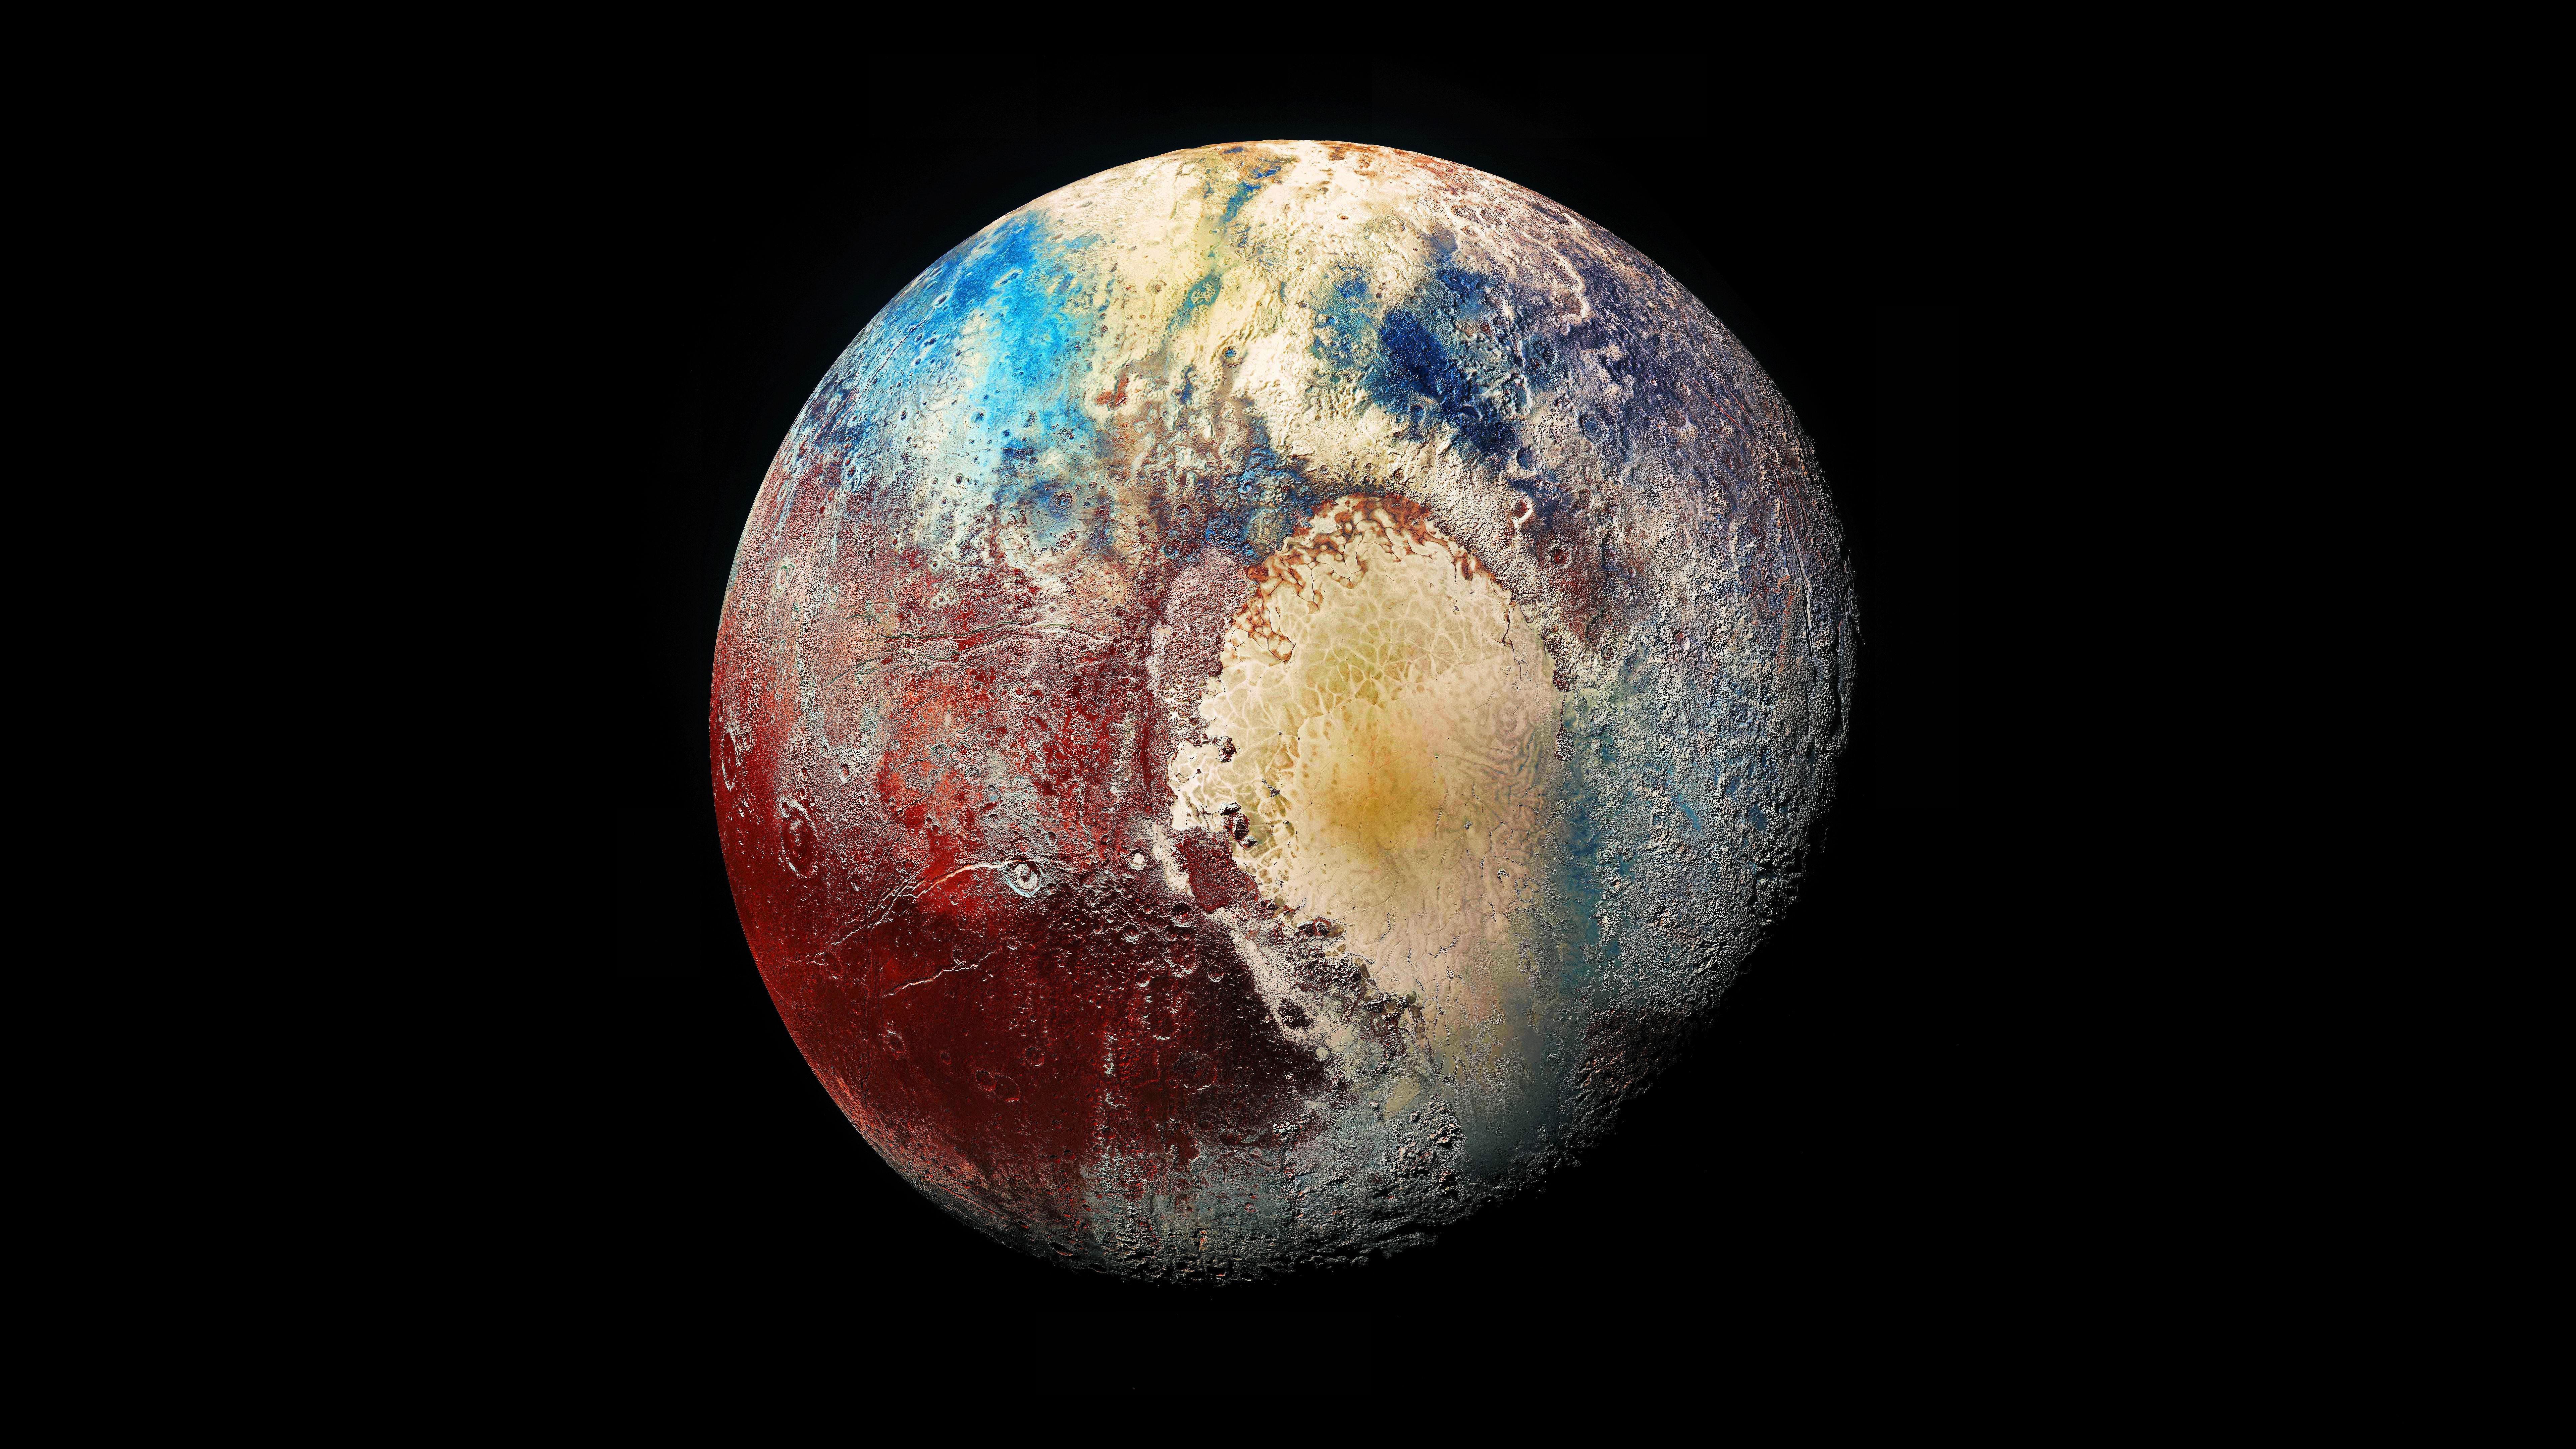 General 7680x4320 planet space terrestrial planet Pluto space art simple background black background digital art